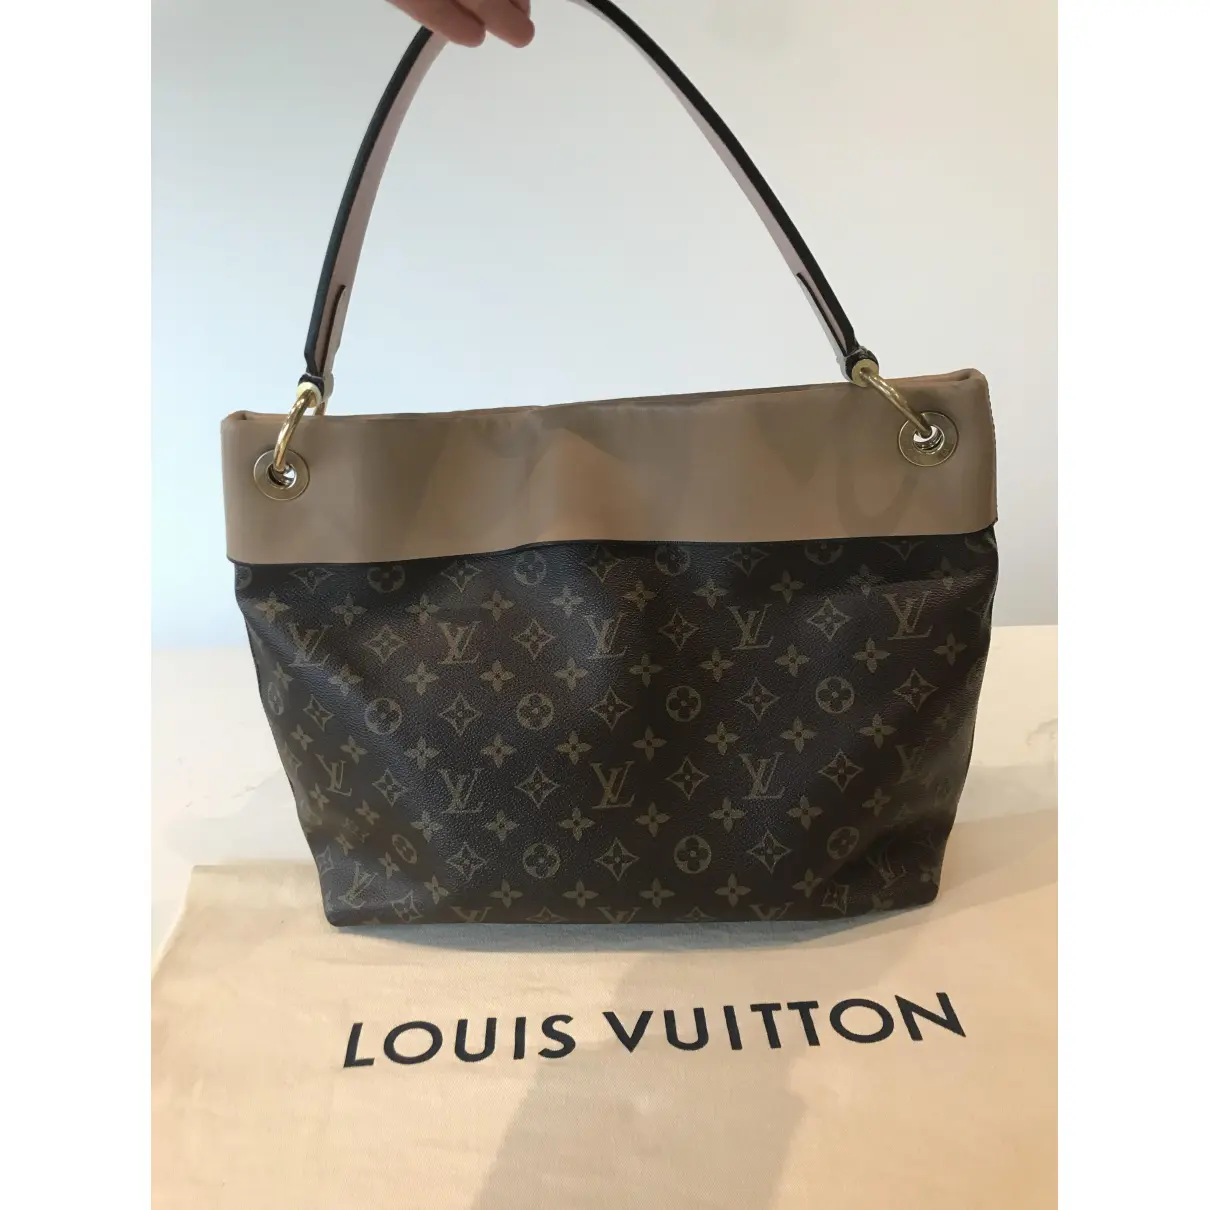 Buy Louis Vuitton Tuileries leather handbag online